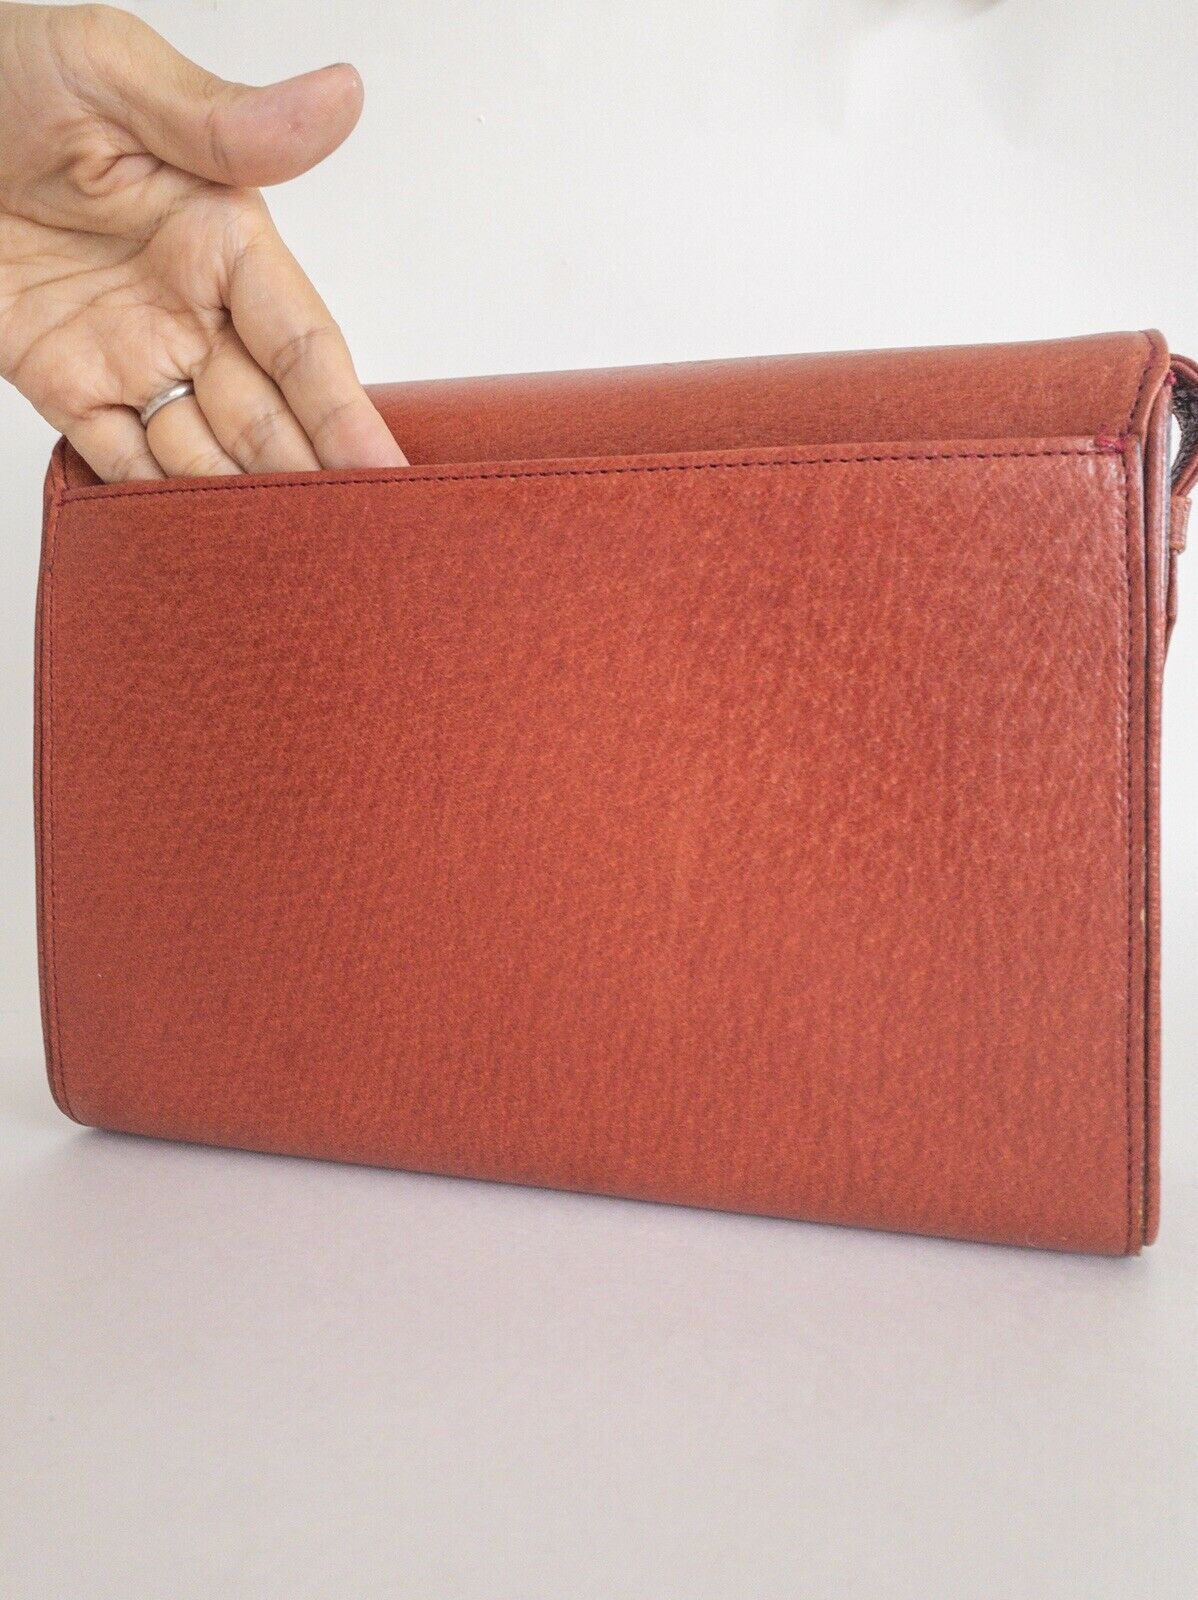 Valentino Garavani 2 Ways Shoulder Bag Crossbody Bag Red/Brick Vintage